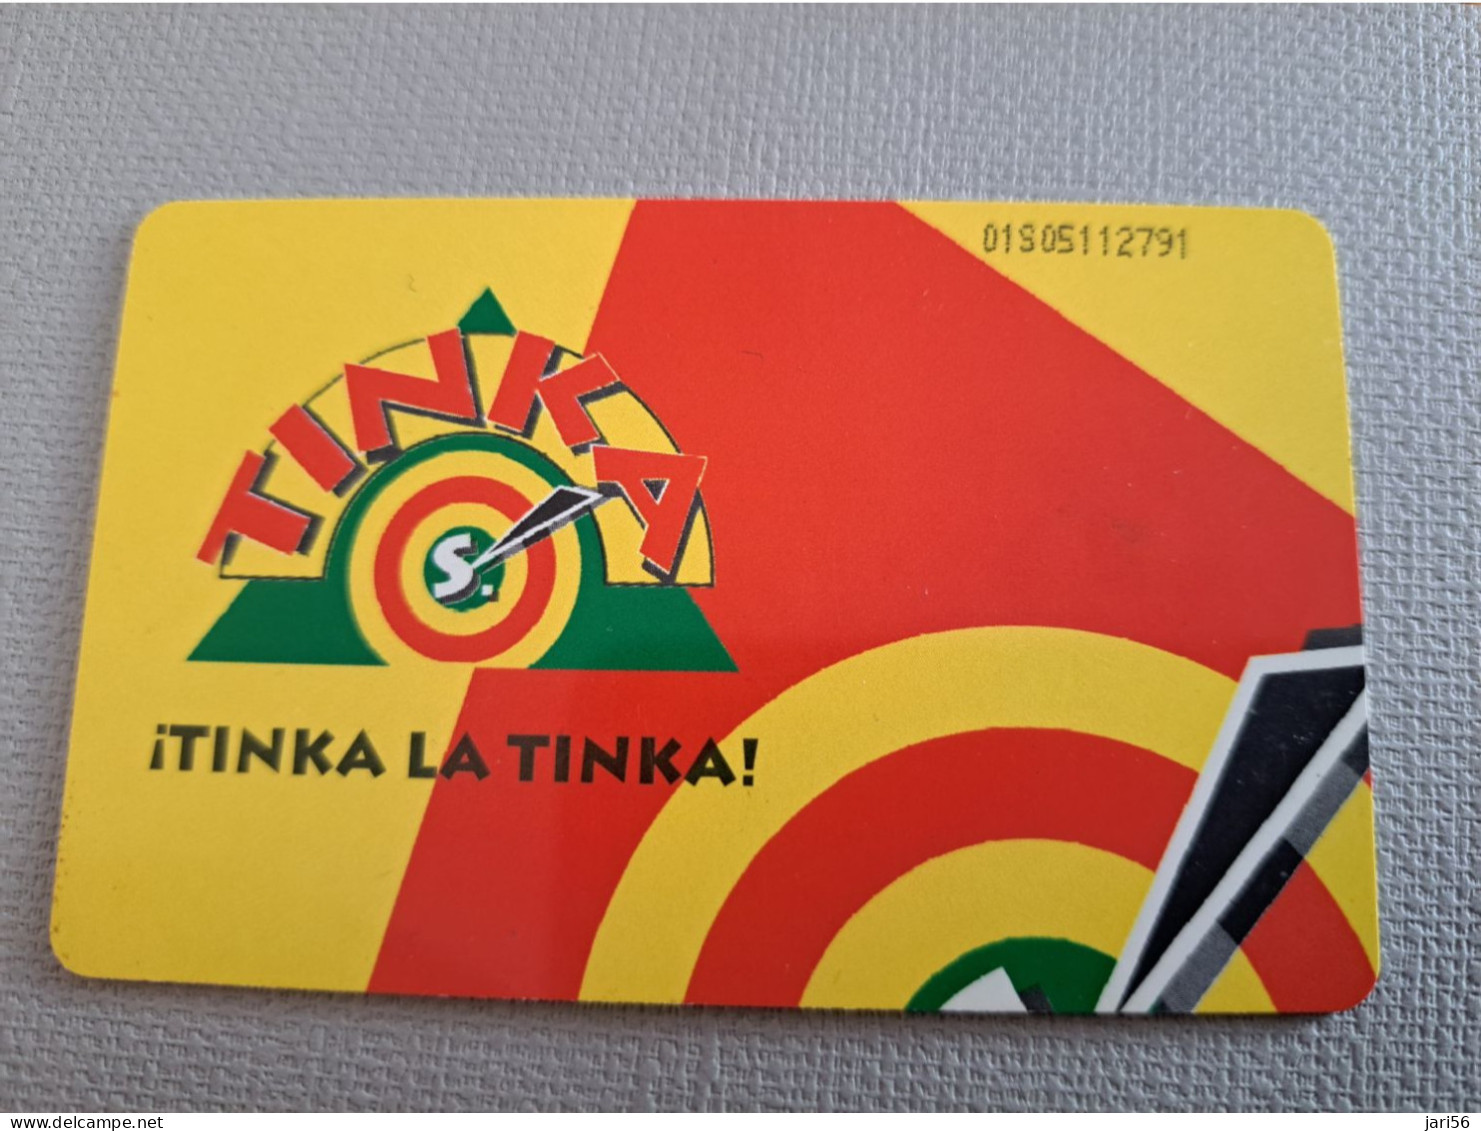 PERU   CHIPCARD   5,00 $ / TINKA LA TINKA/ NICE LADY IN COSTUME     Fine Used Card  ** 15130** - Perú